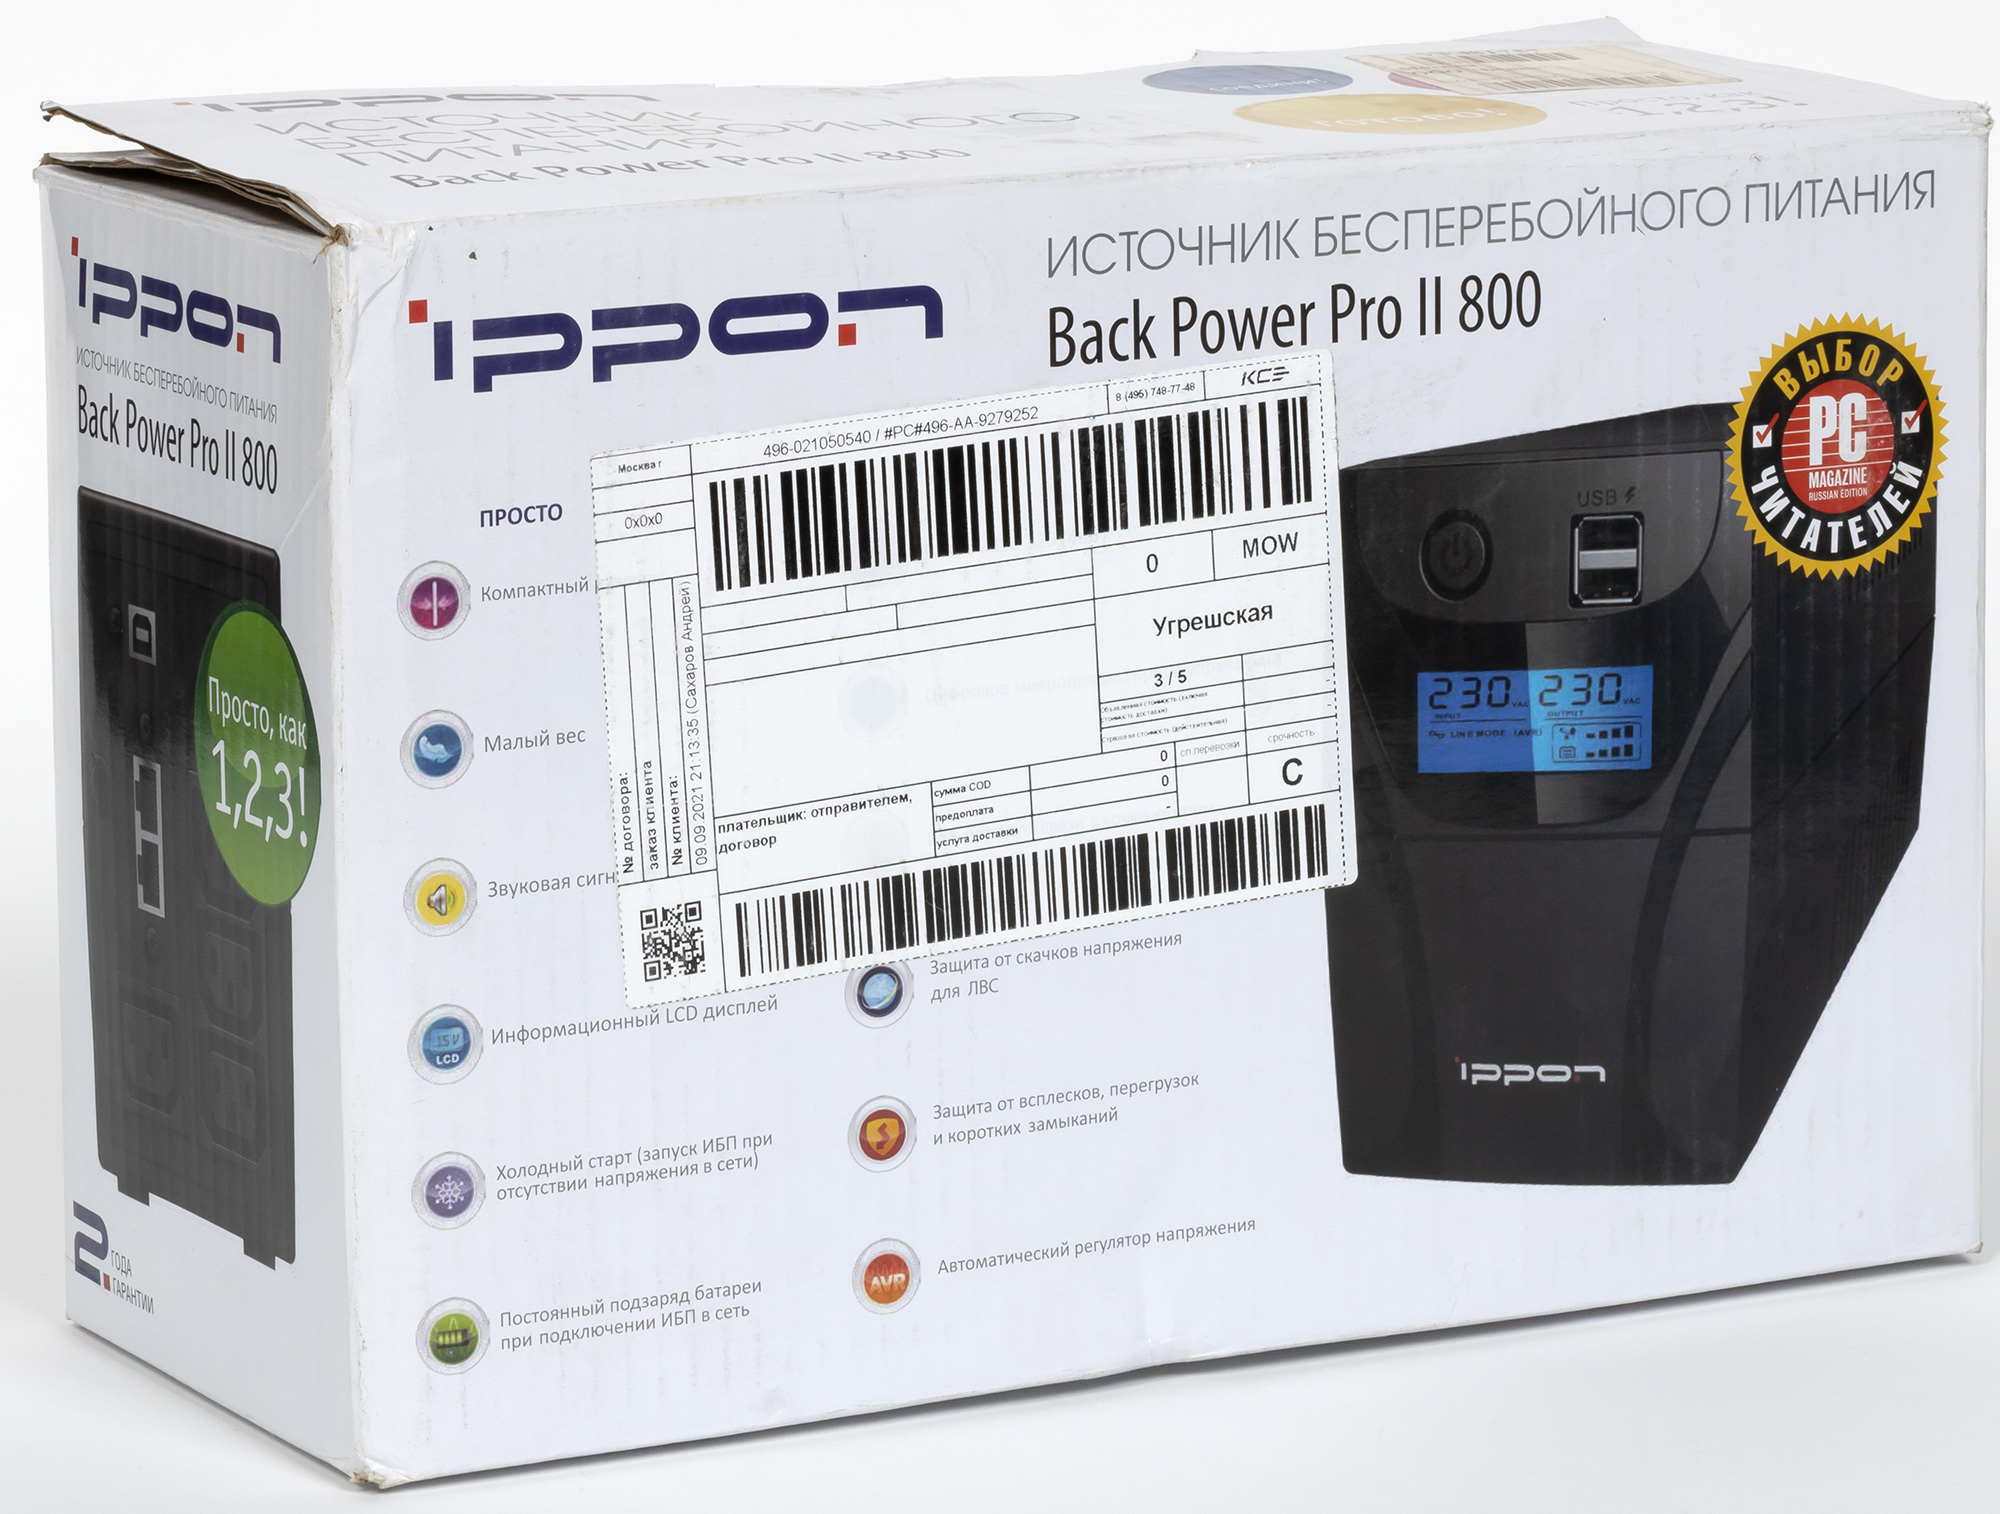 Ups back power pro. Ippon back Power Pro 800. Ups Ippon back 800 Power. Ippon back Power Pro II 800. ИБП Ippon back Power Pro 800.